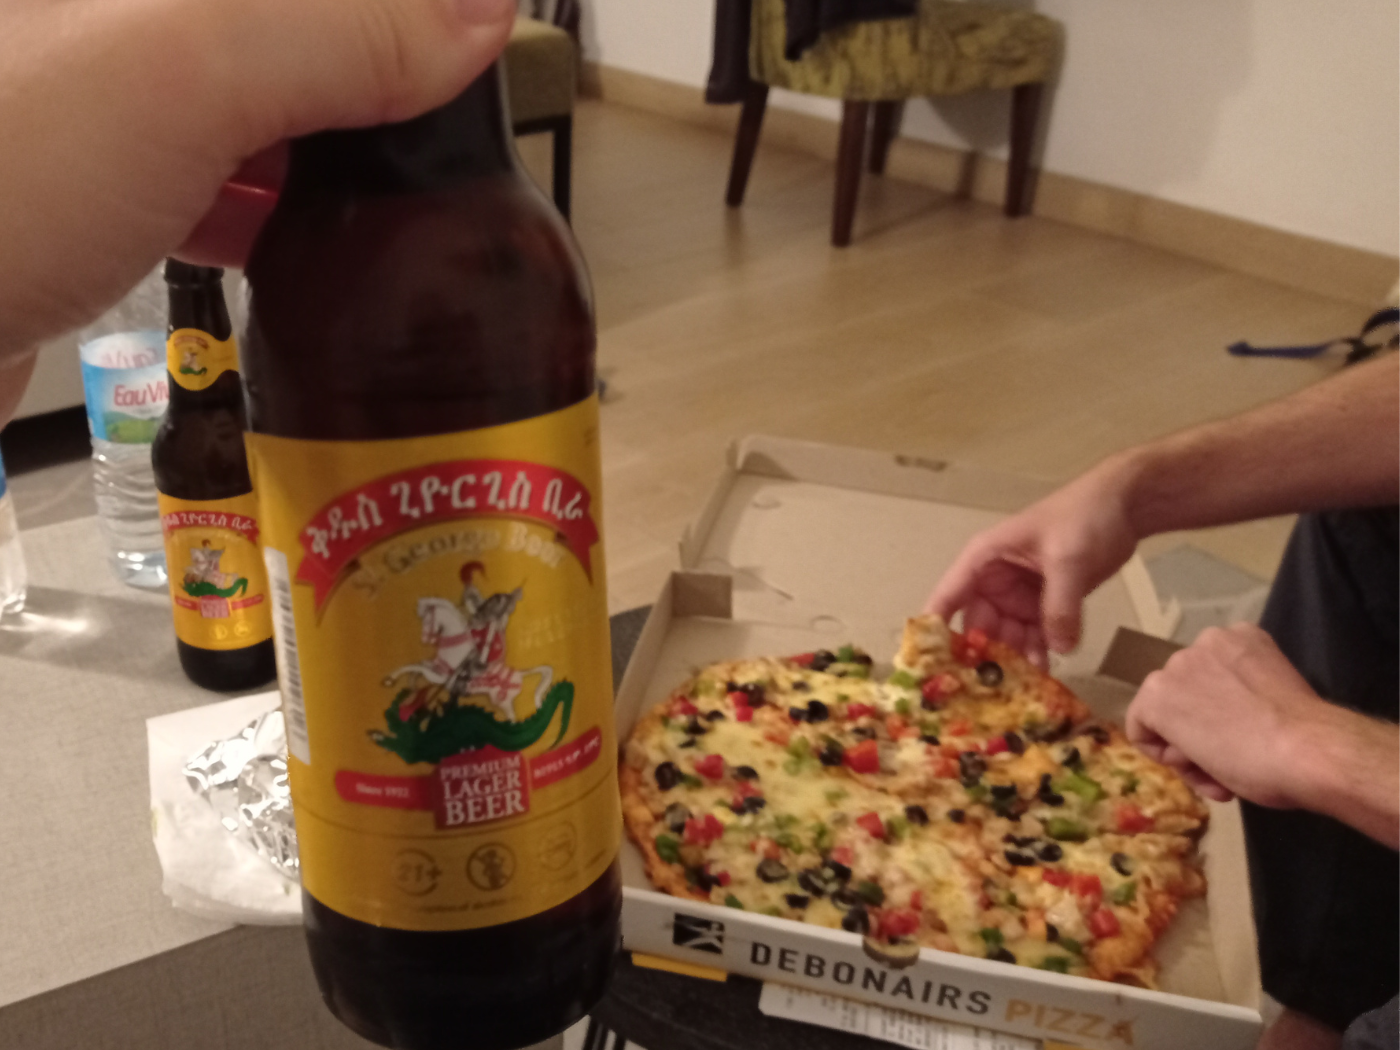 St George beer and Debonairs pizza in Addis Ababa